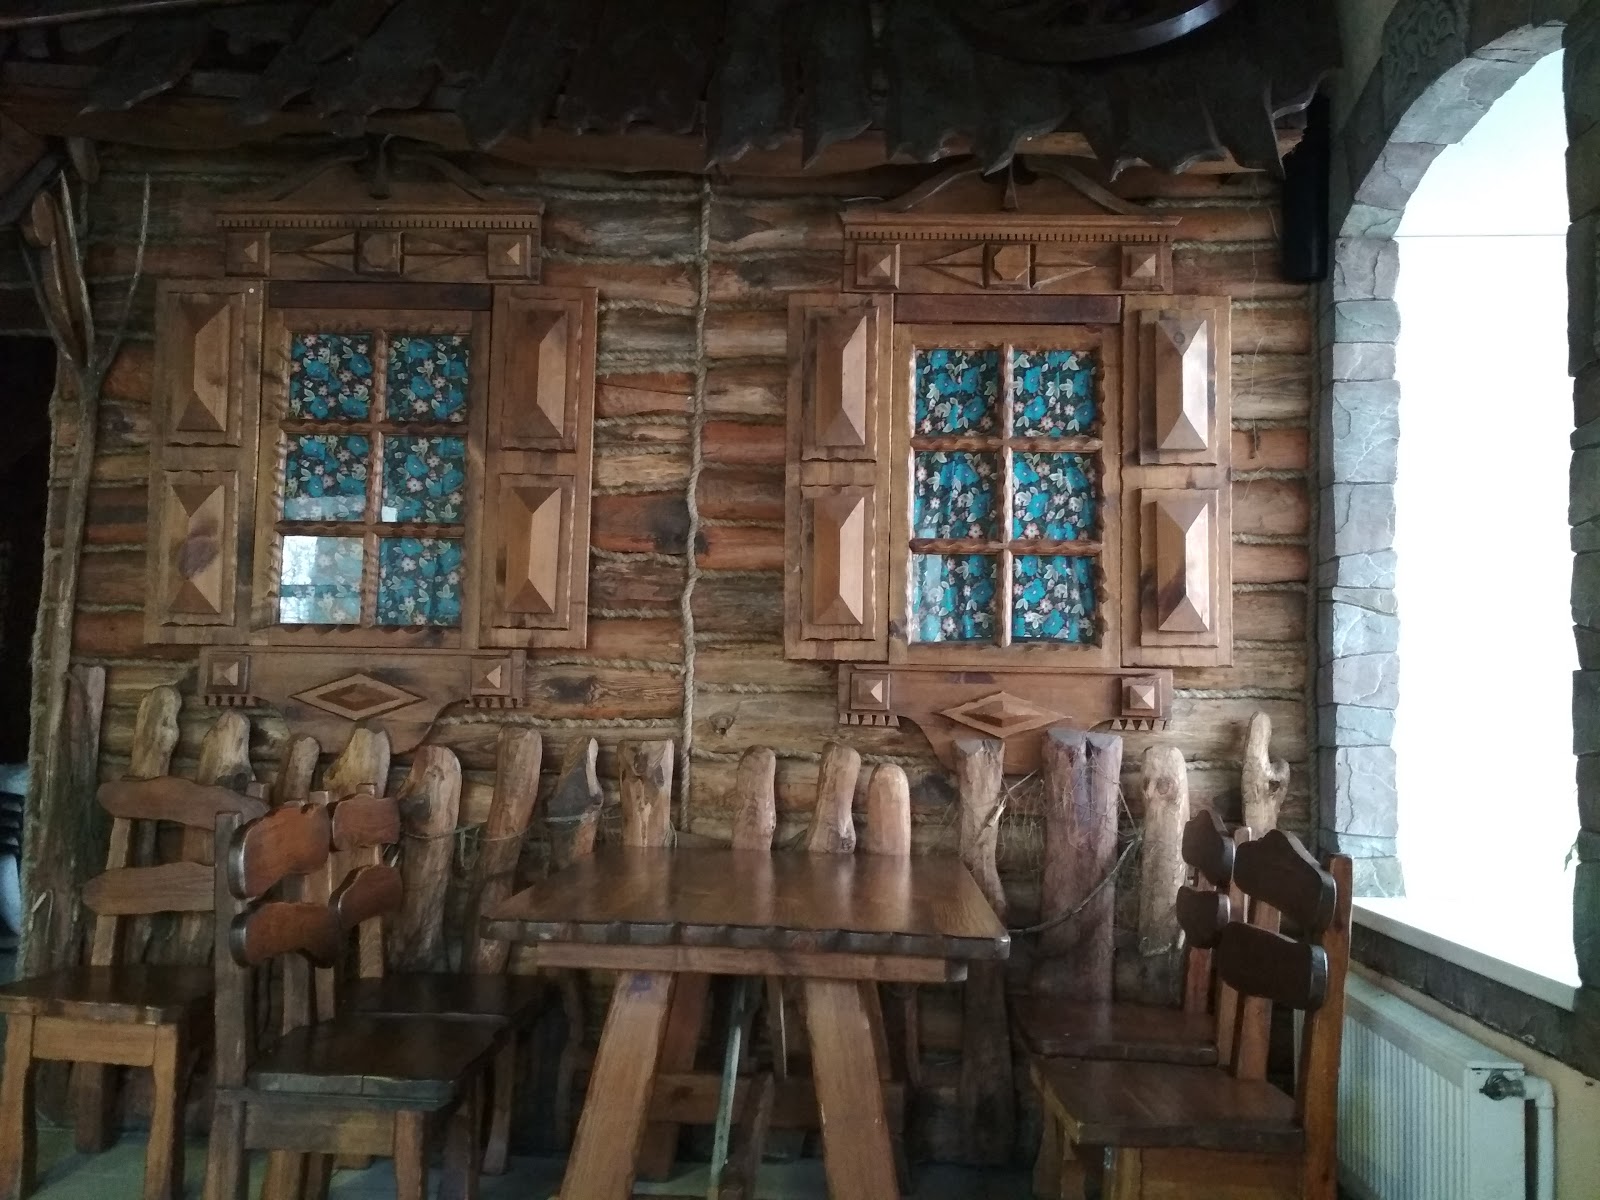 Kafe "Staryy Khutor"